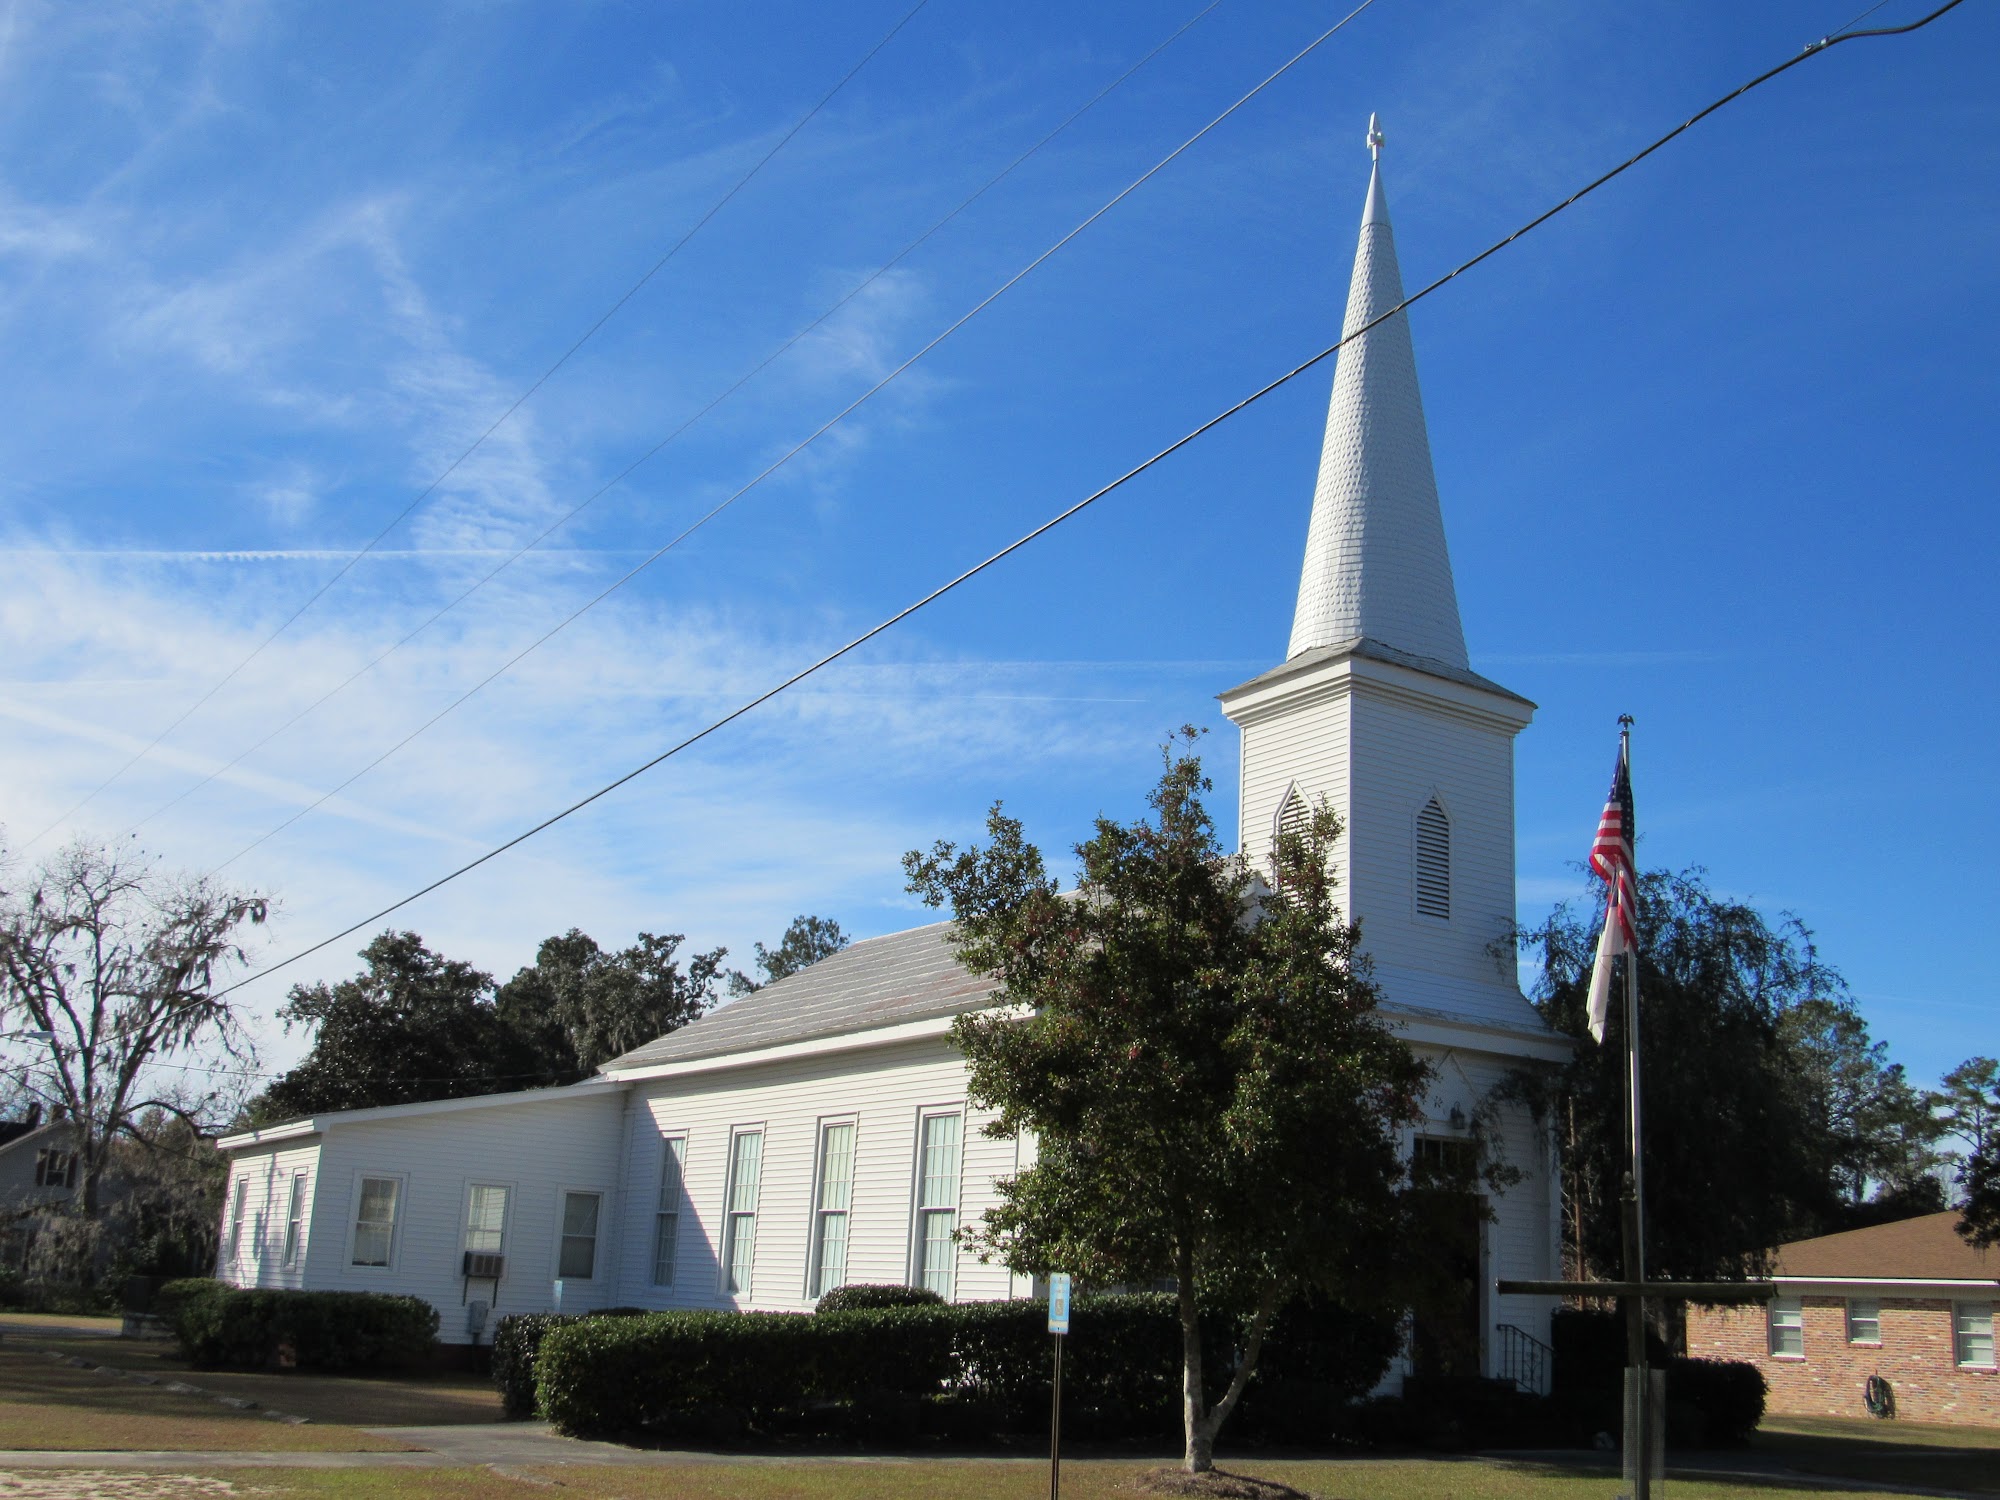 Guyton Methodist Church